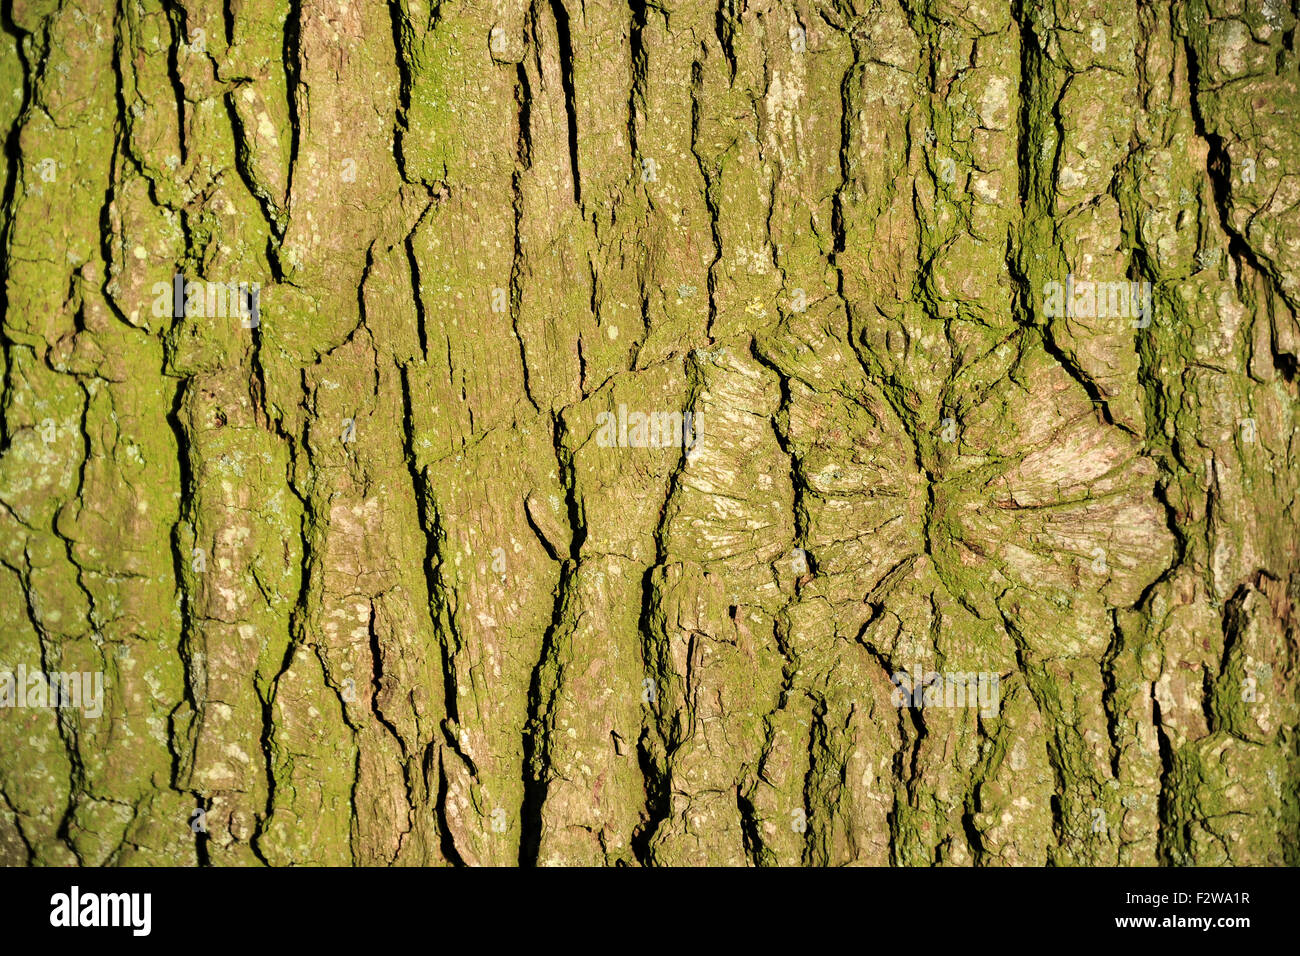 09.05.2015, Sandkrug, Lower Saxony, Germany - Bark of a tree. 0HD150509D048CAROEX.JPG - NOT for SALE in G E R M A N Y, A U S T Stock Photo